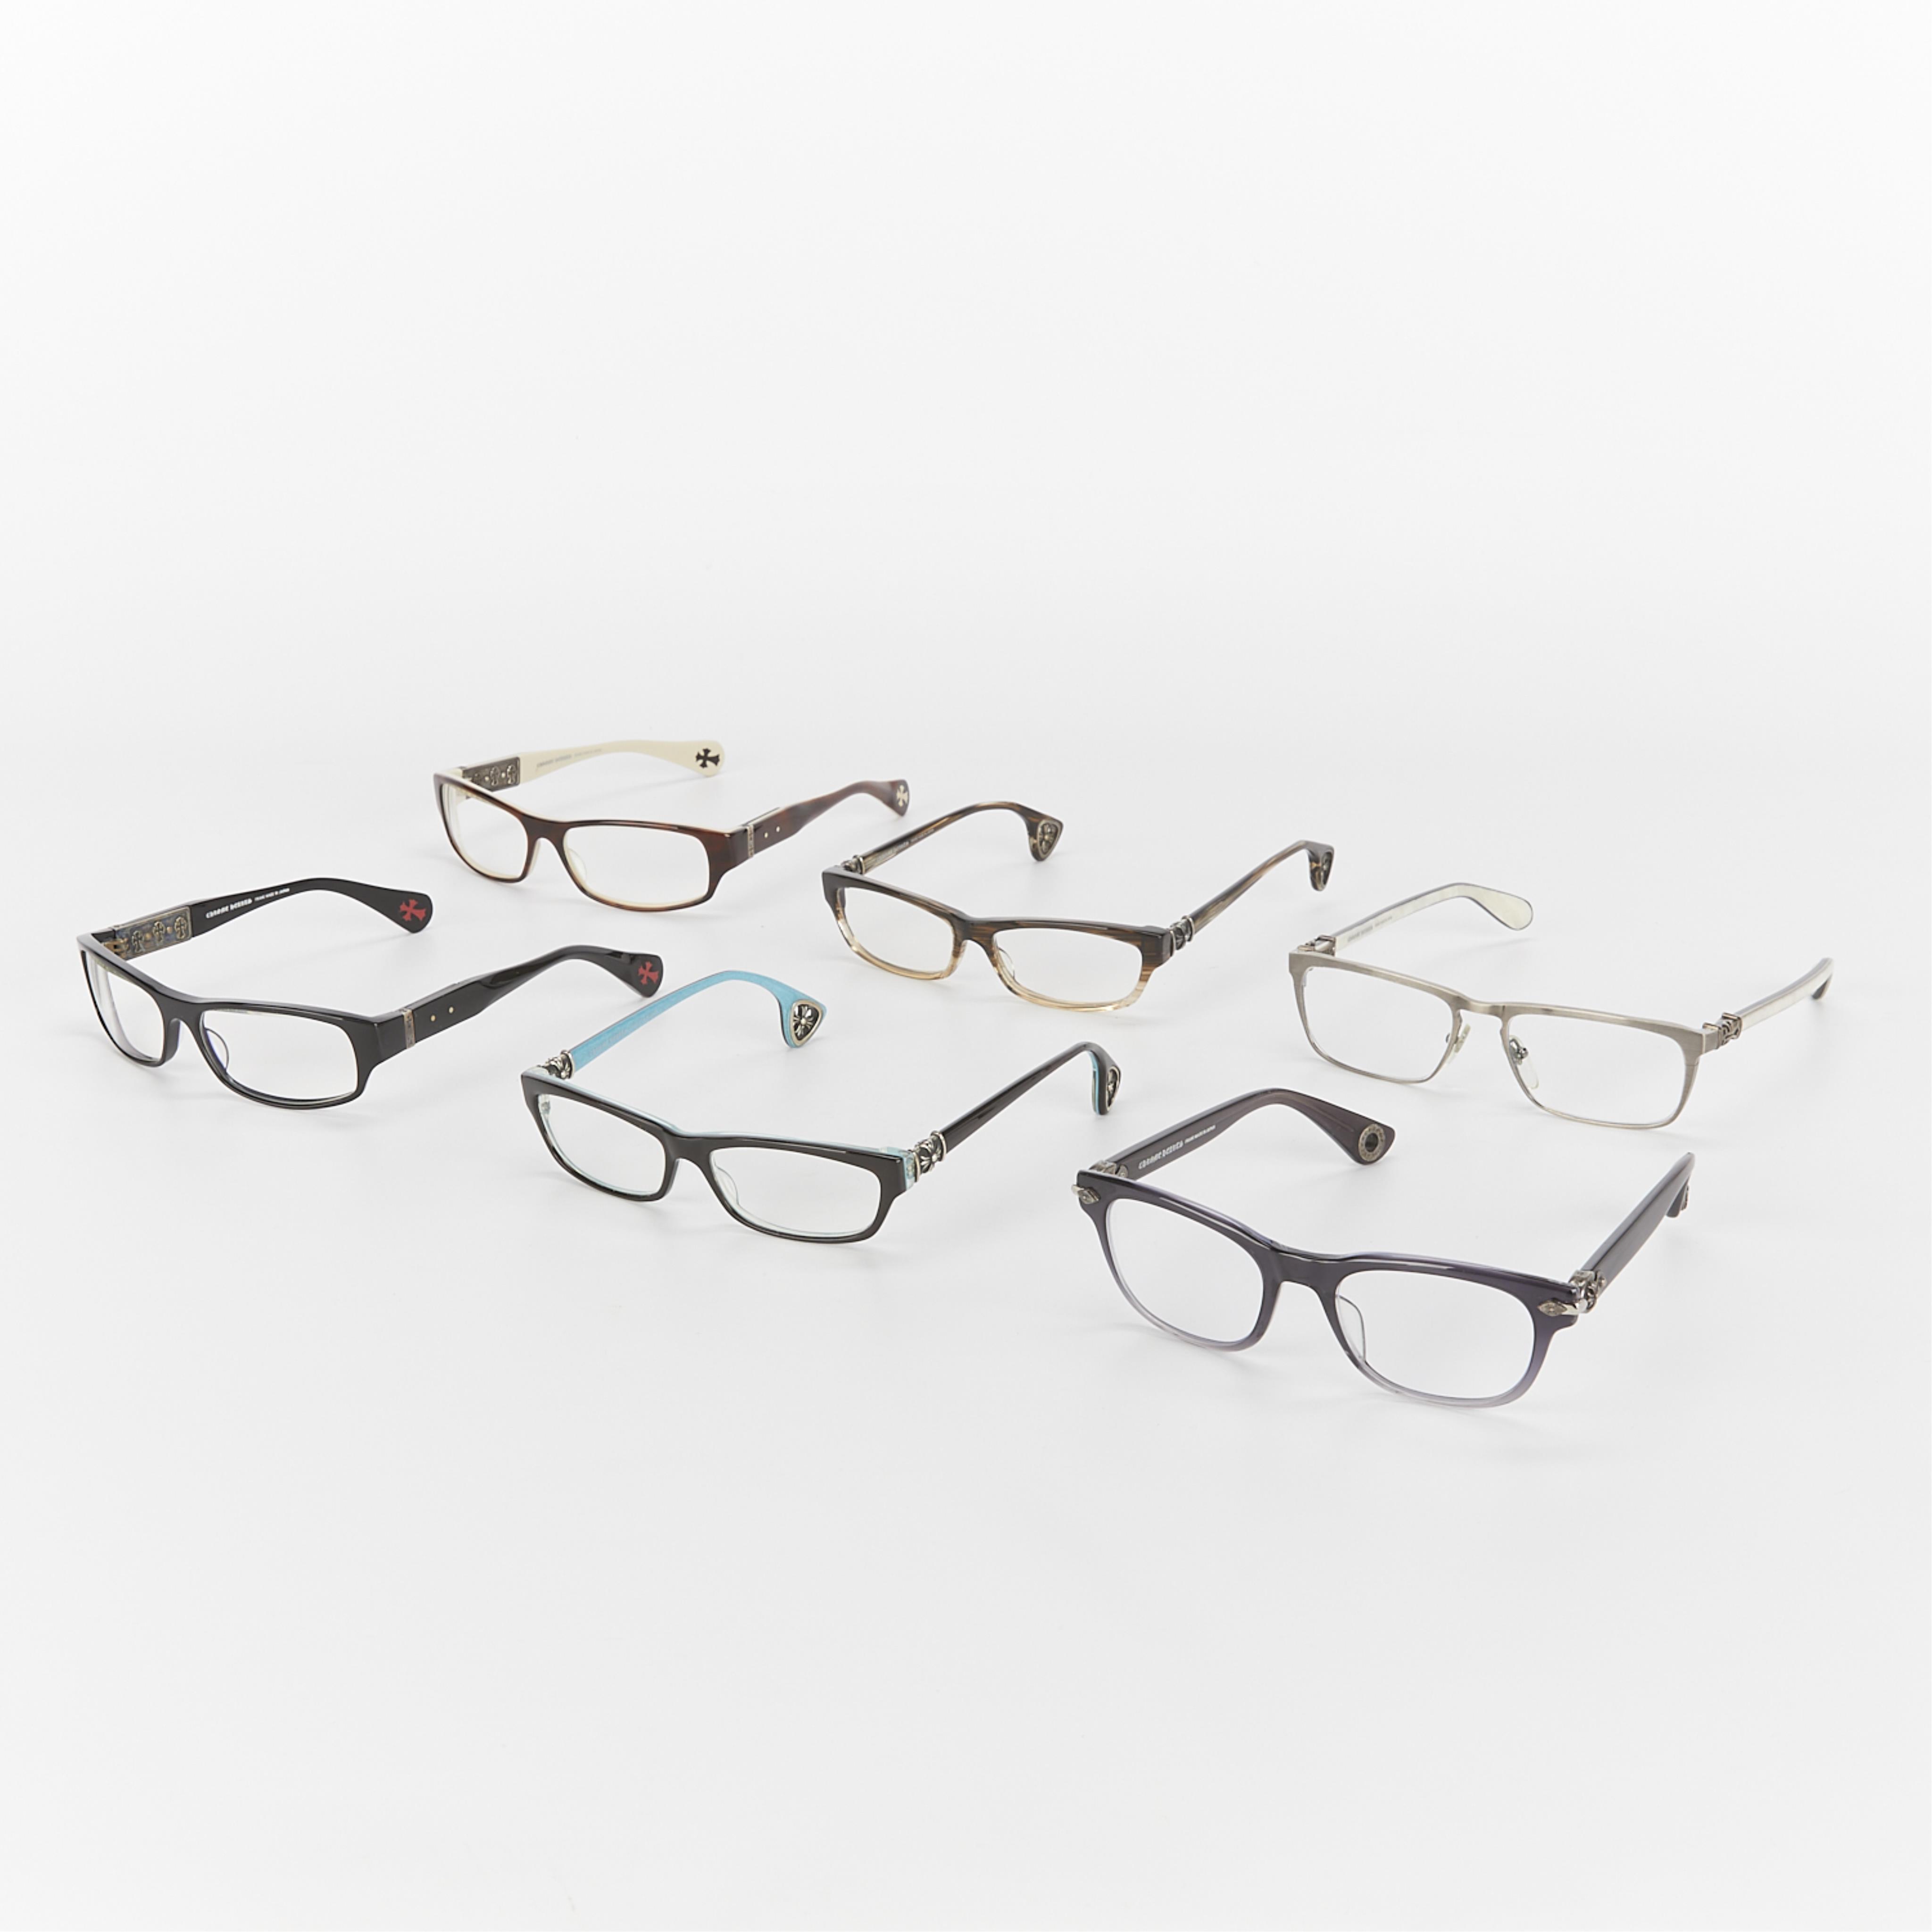 Grp of 6 Chrome Hearts Eyeglasses - Image 4 of 12